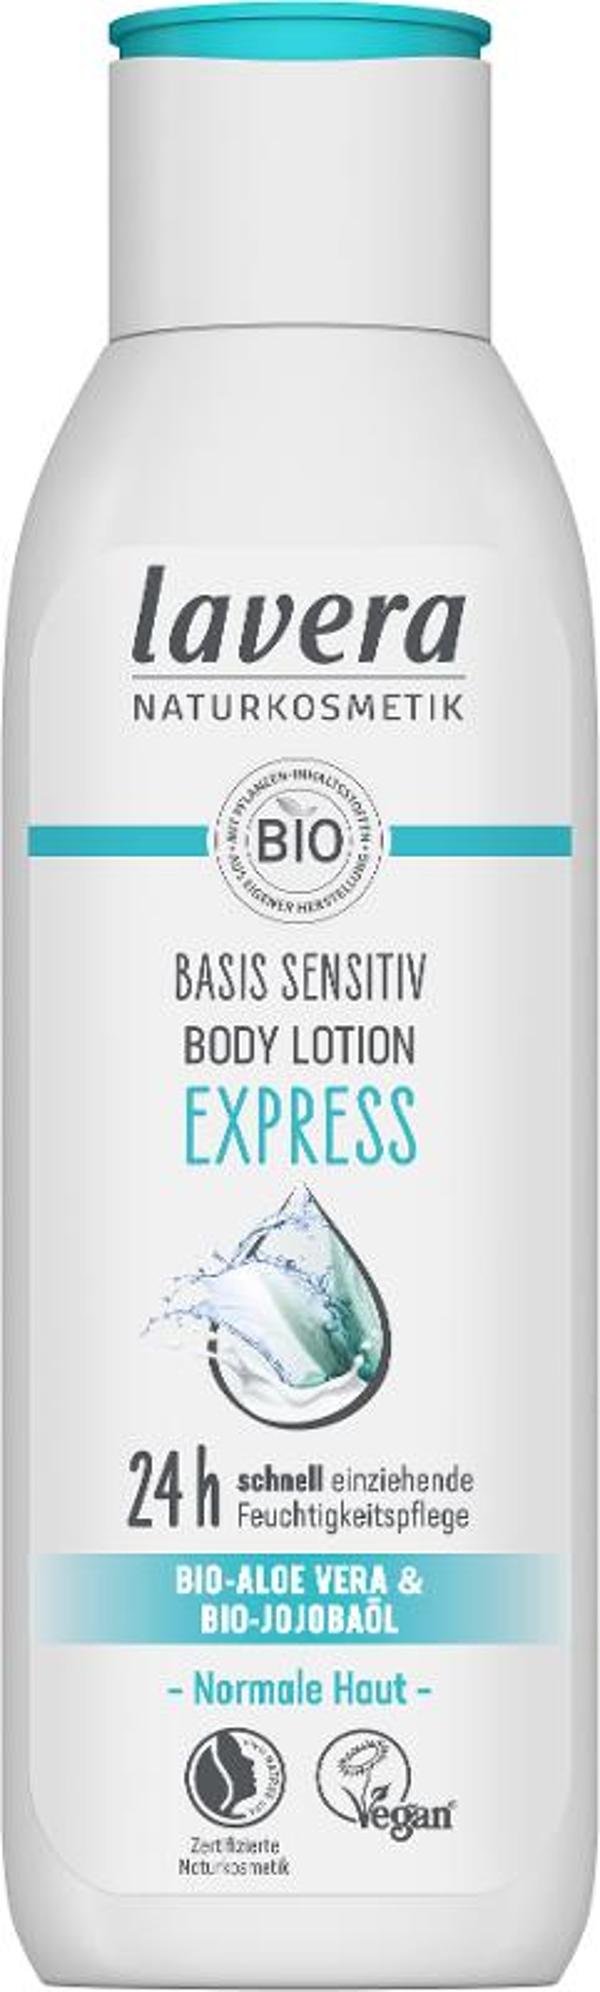 Produktfoto zu Lavera Basis Sensitiv Bodylotion Express 250ml